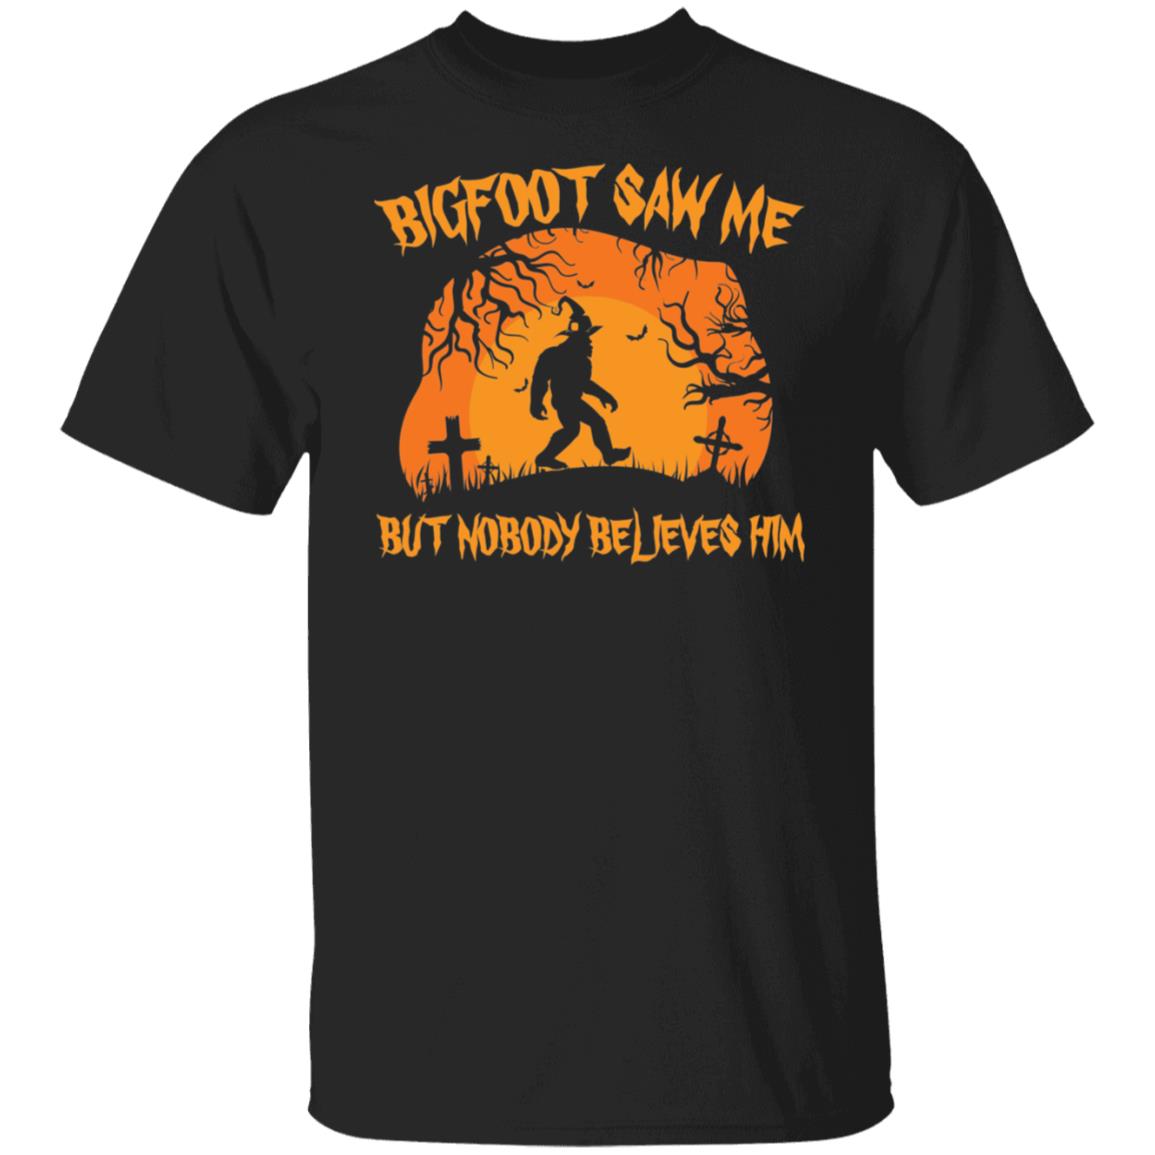 Bigfoot Saw Me But Nobody Believes Him Halloween Shirt